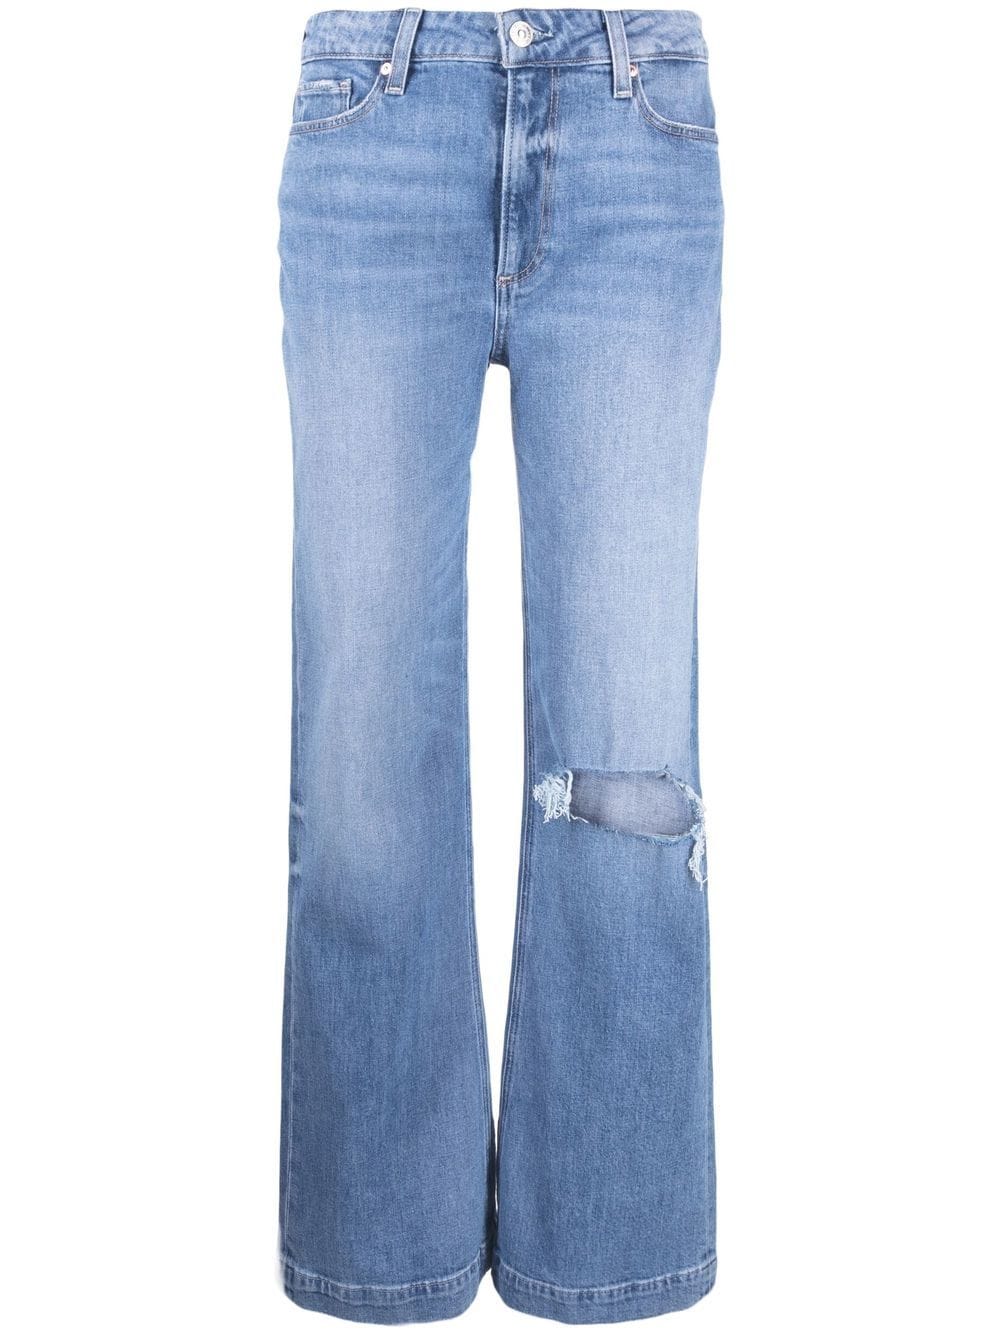 PAIGE Jeans im Distressed-Look - Blau von PAIGE